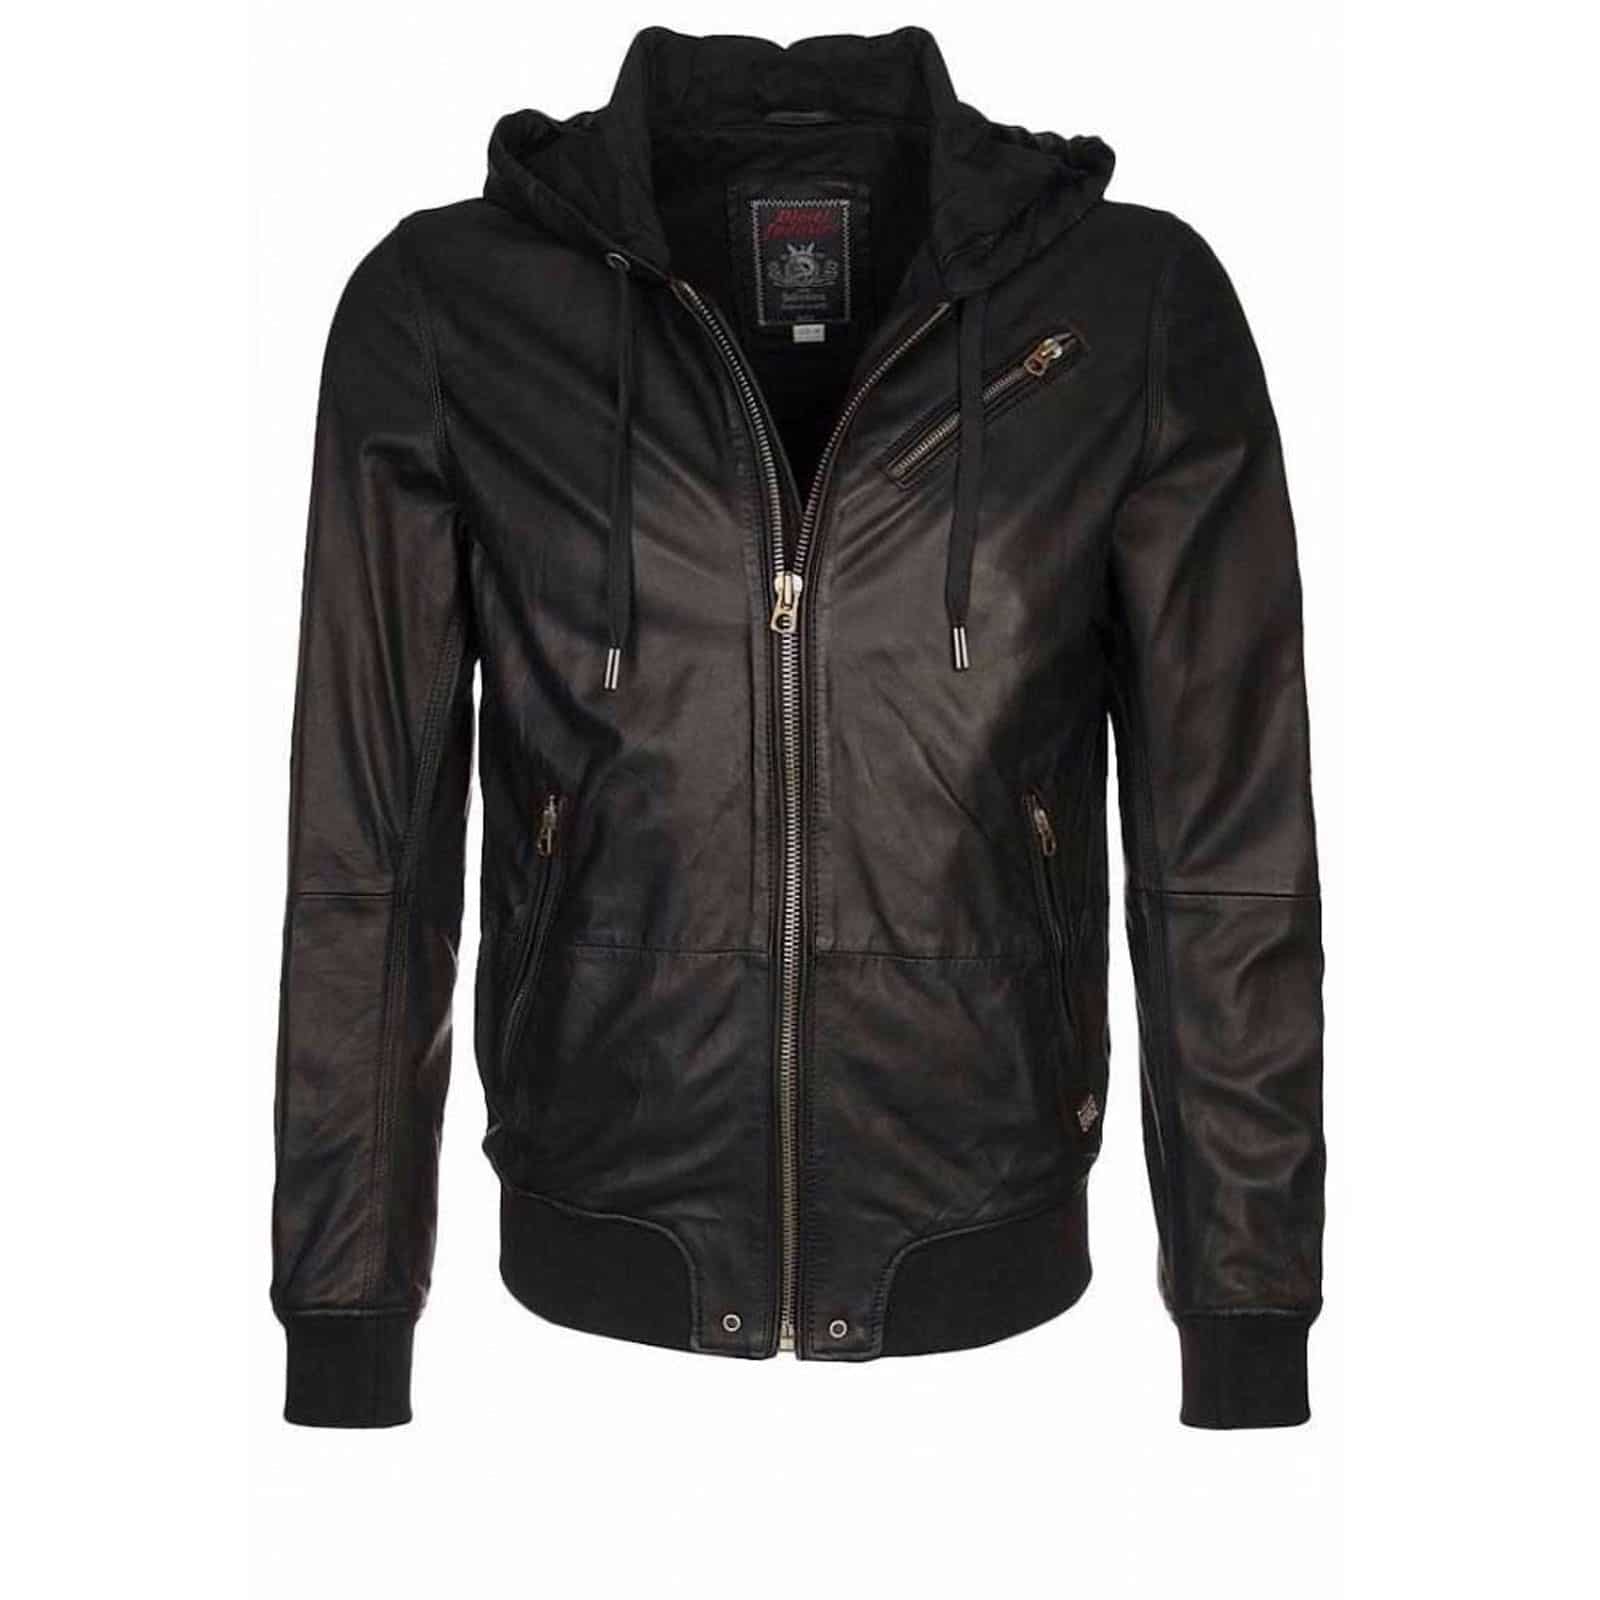 Buy Hooded Black Leather Bomber Jacket - Jackets for Men 0070